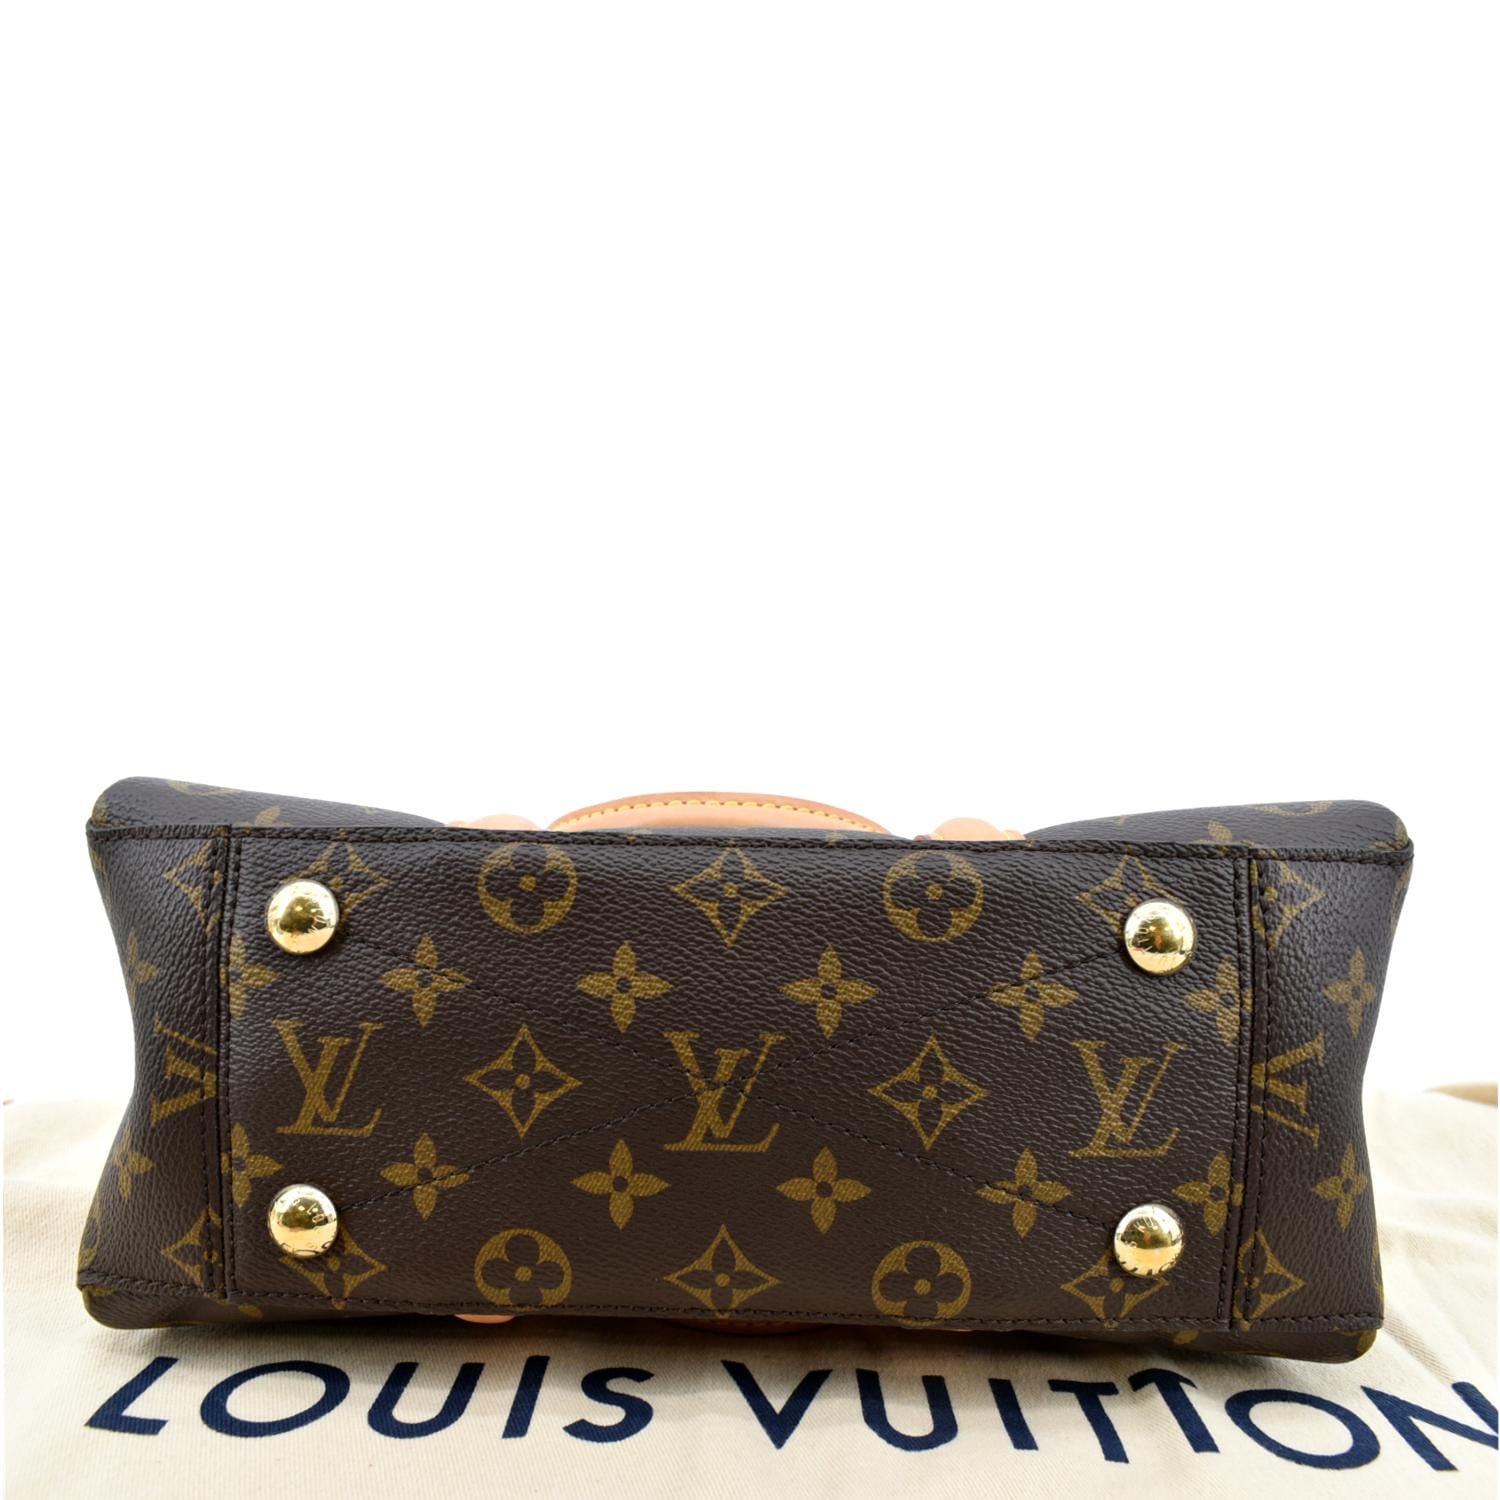 ❤️ TOUR - Louis Vuitton Soufflot MM Monogram shoulder / cross body bag 